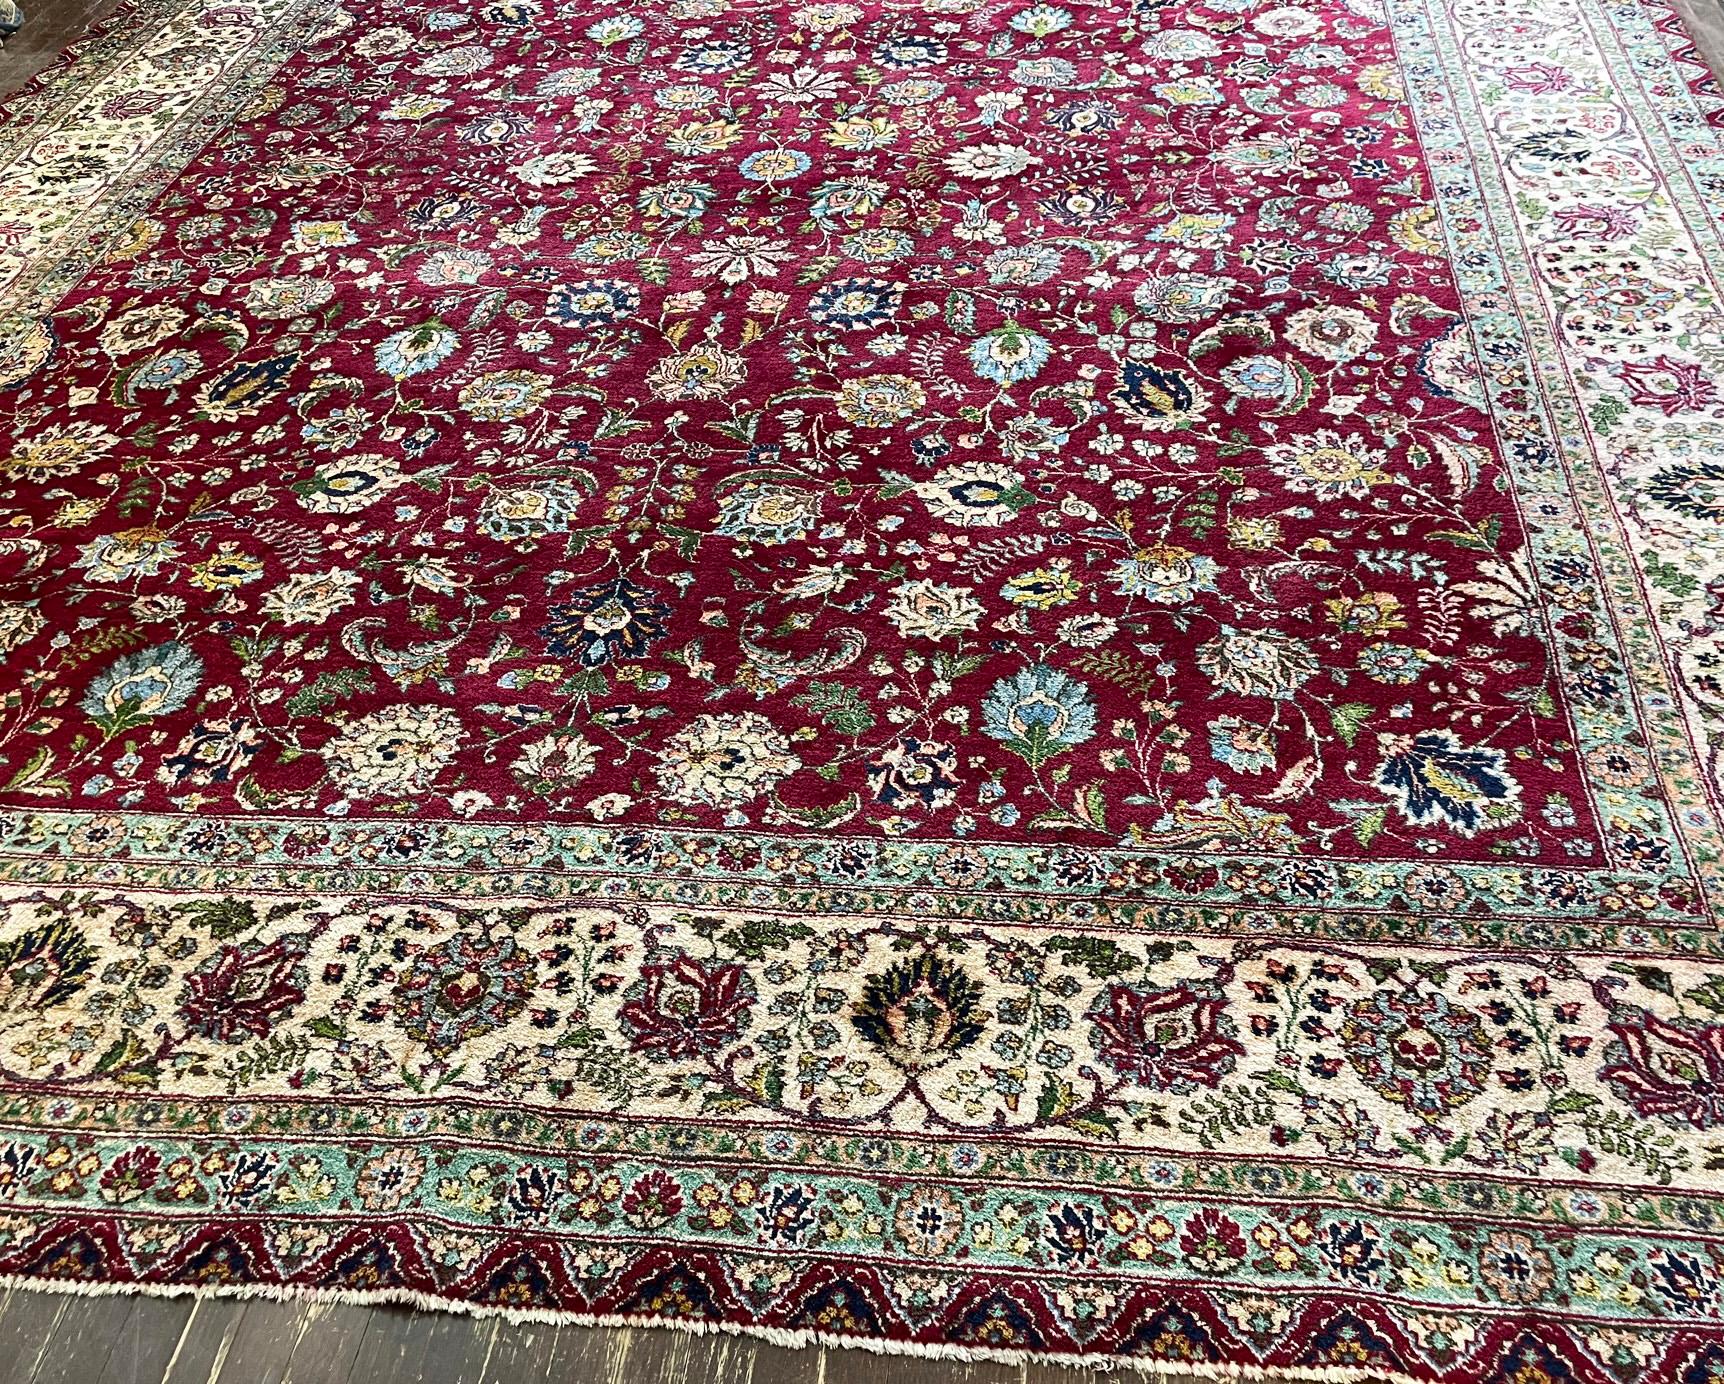 Hand-Knotted Antique/Vintage Persian Tabriz Carpet, 11'6